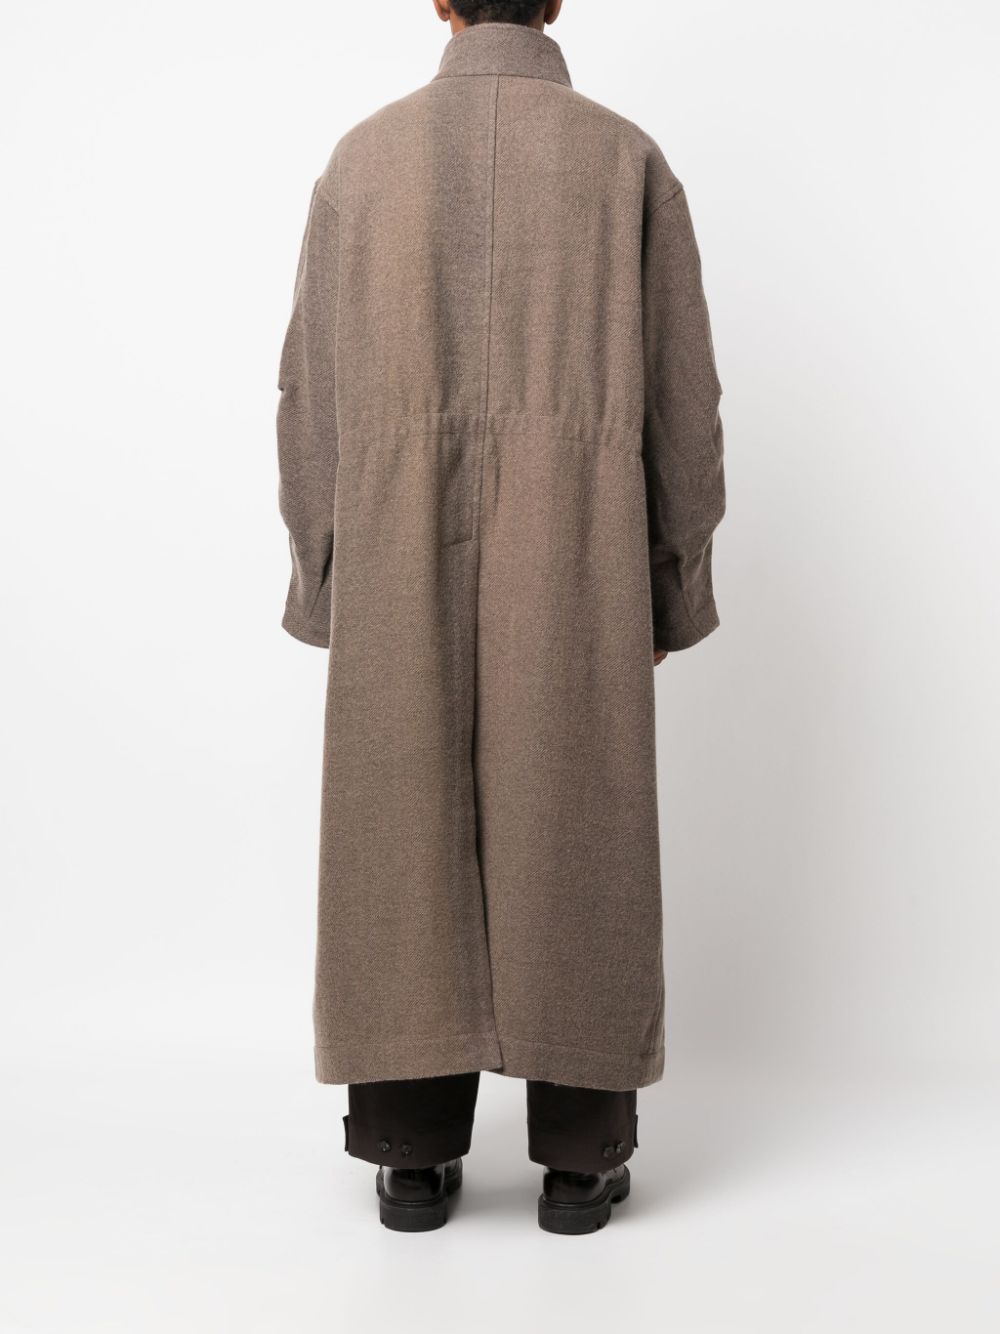 ZIGGY CHEN Men Stand Collar Double Breasted Coat – Atelier New York